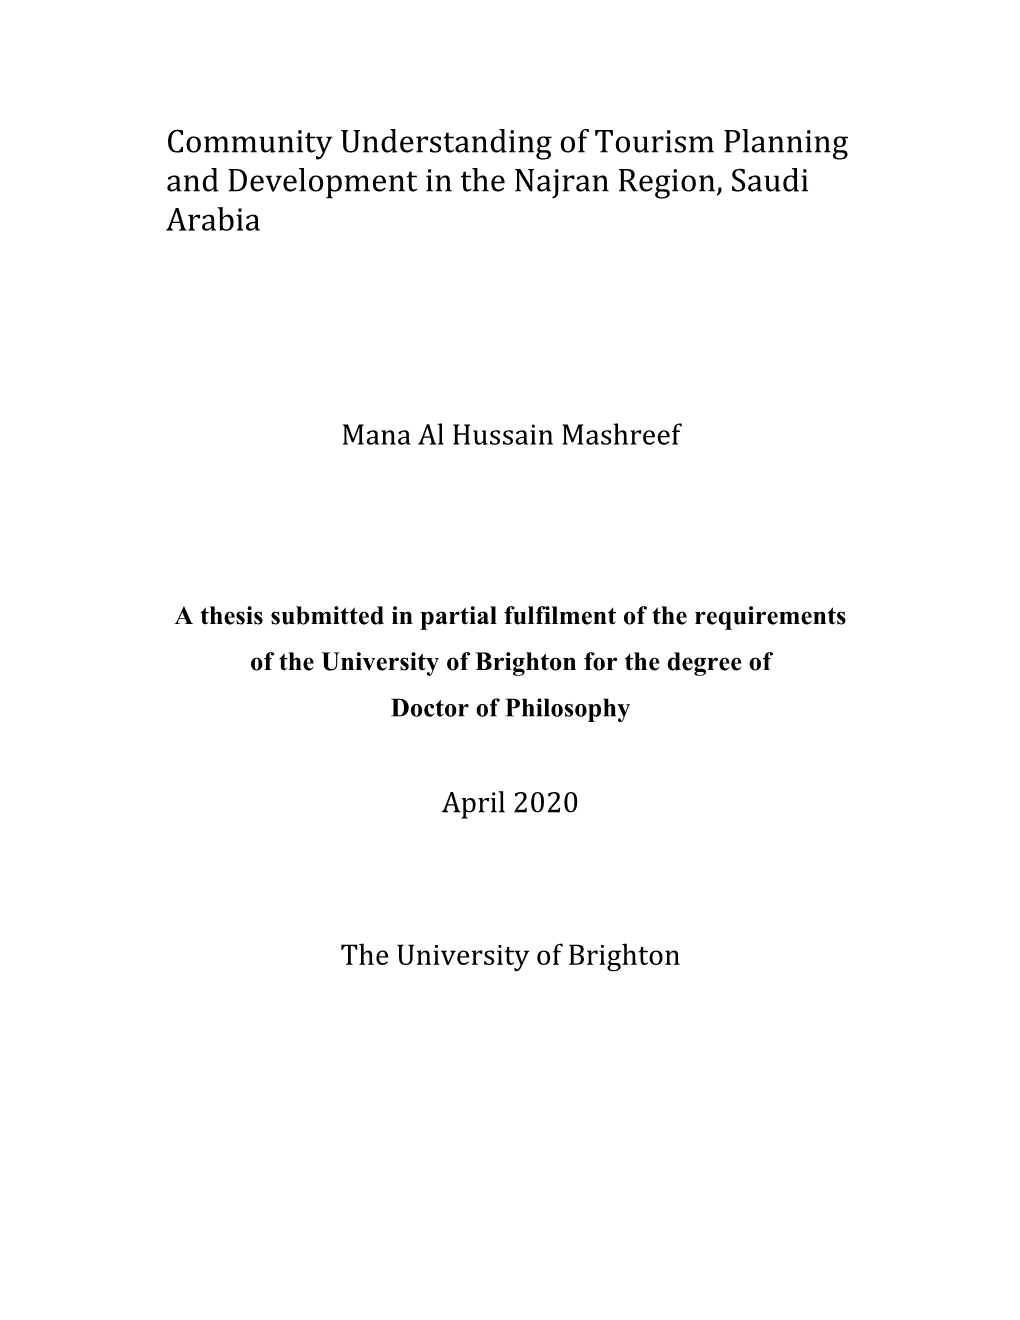 Community Understanding of Tourism Planning and Development in the Najran Region, Saudi Arabia